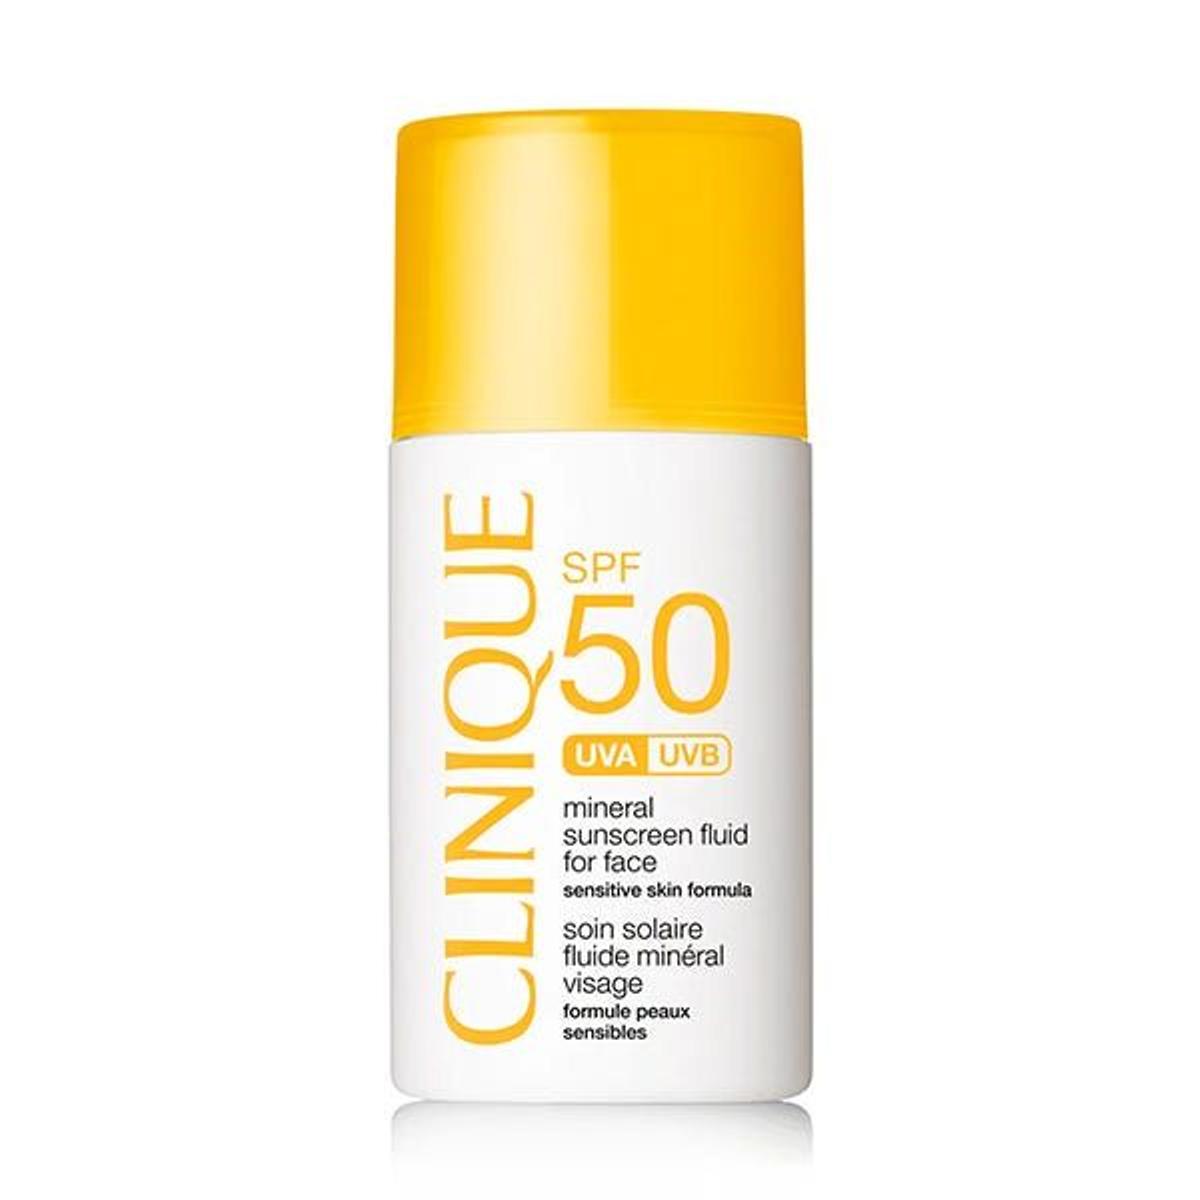 Mineral Sunscreen Fluid For Face Spf 50, de Clinique